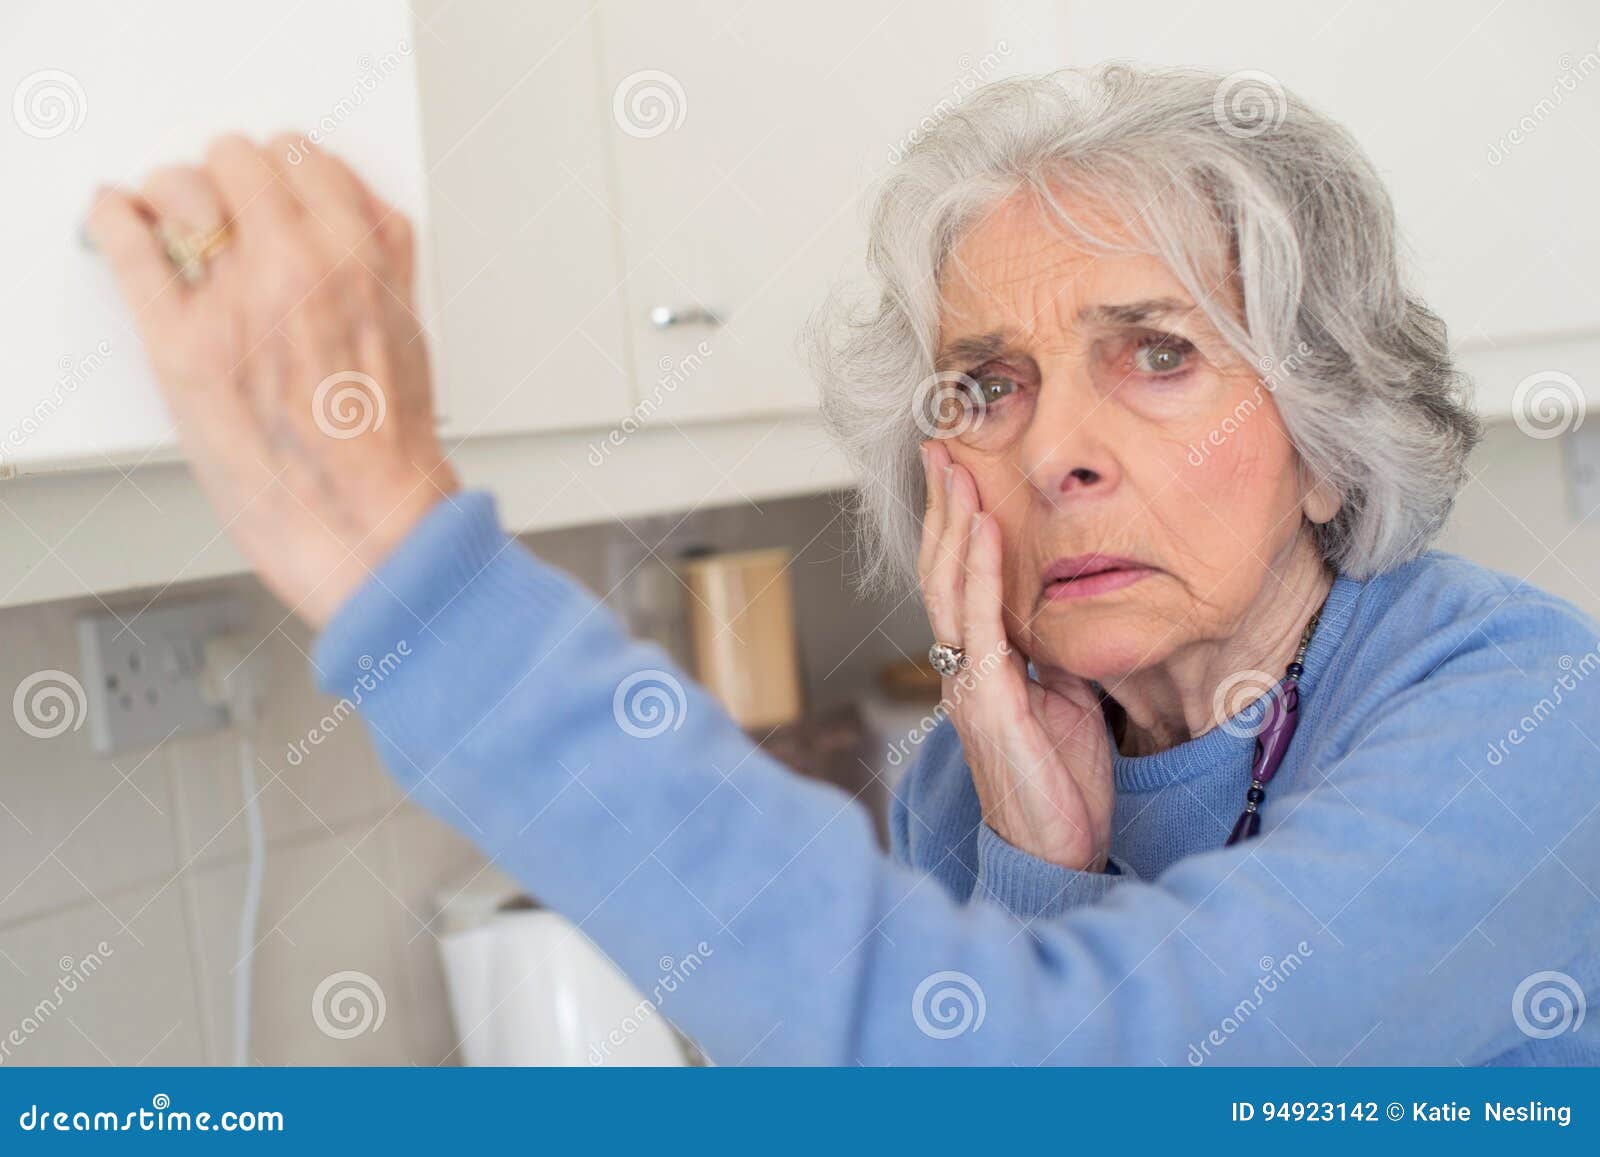 forgetful senior woman with dementia looking in cupboard